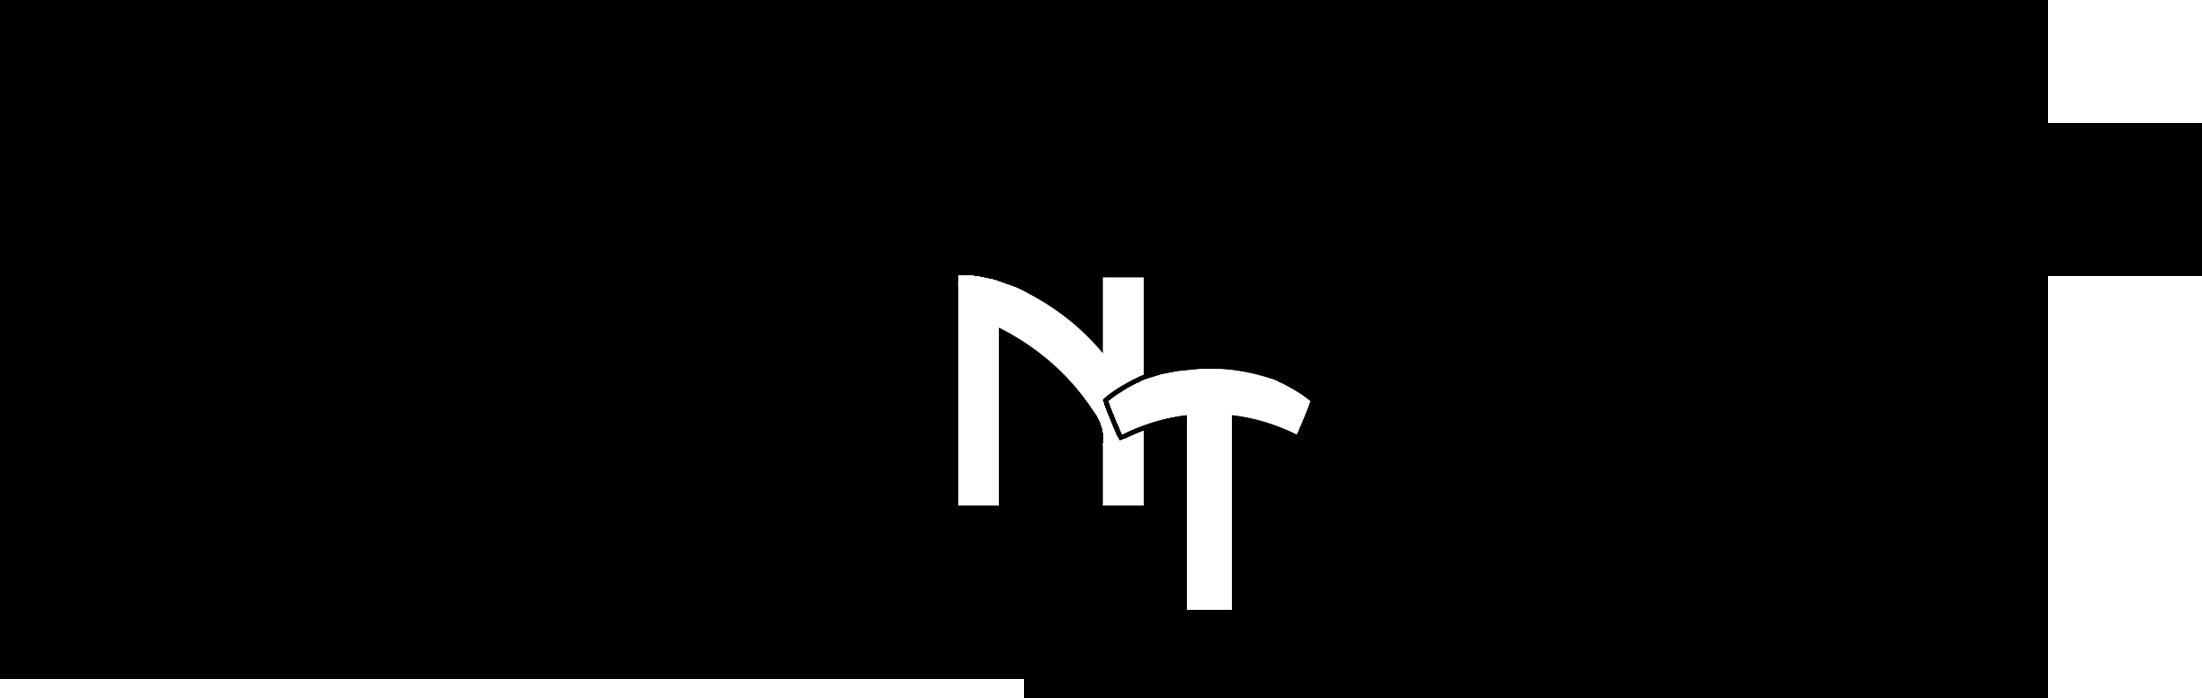 Nashville Transfer logo 1